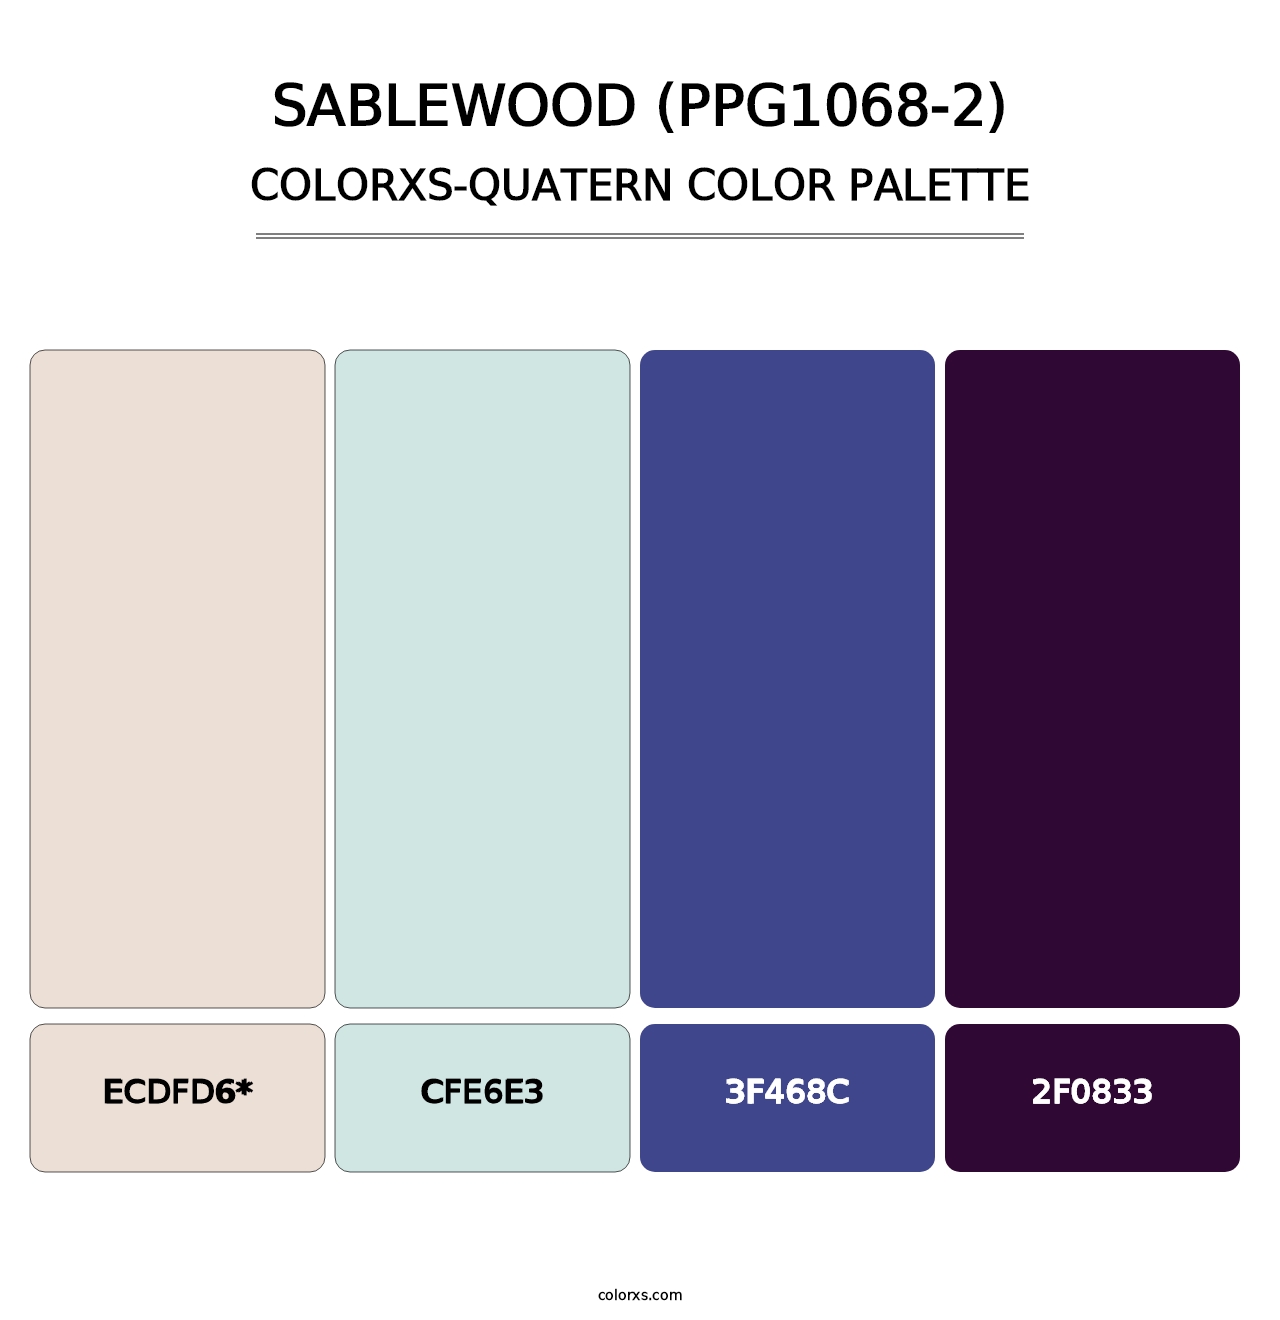 Sablewood (PPG1068-2) - Colorxs Quatern Palette